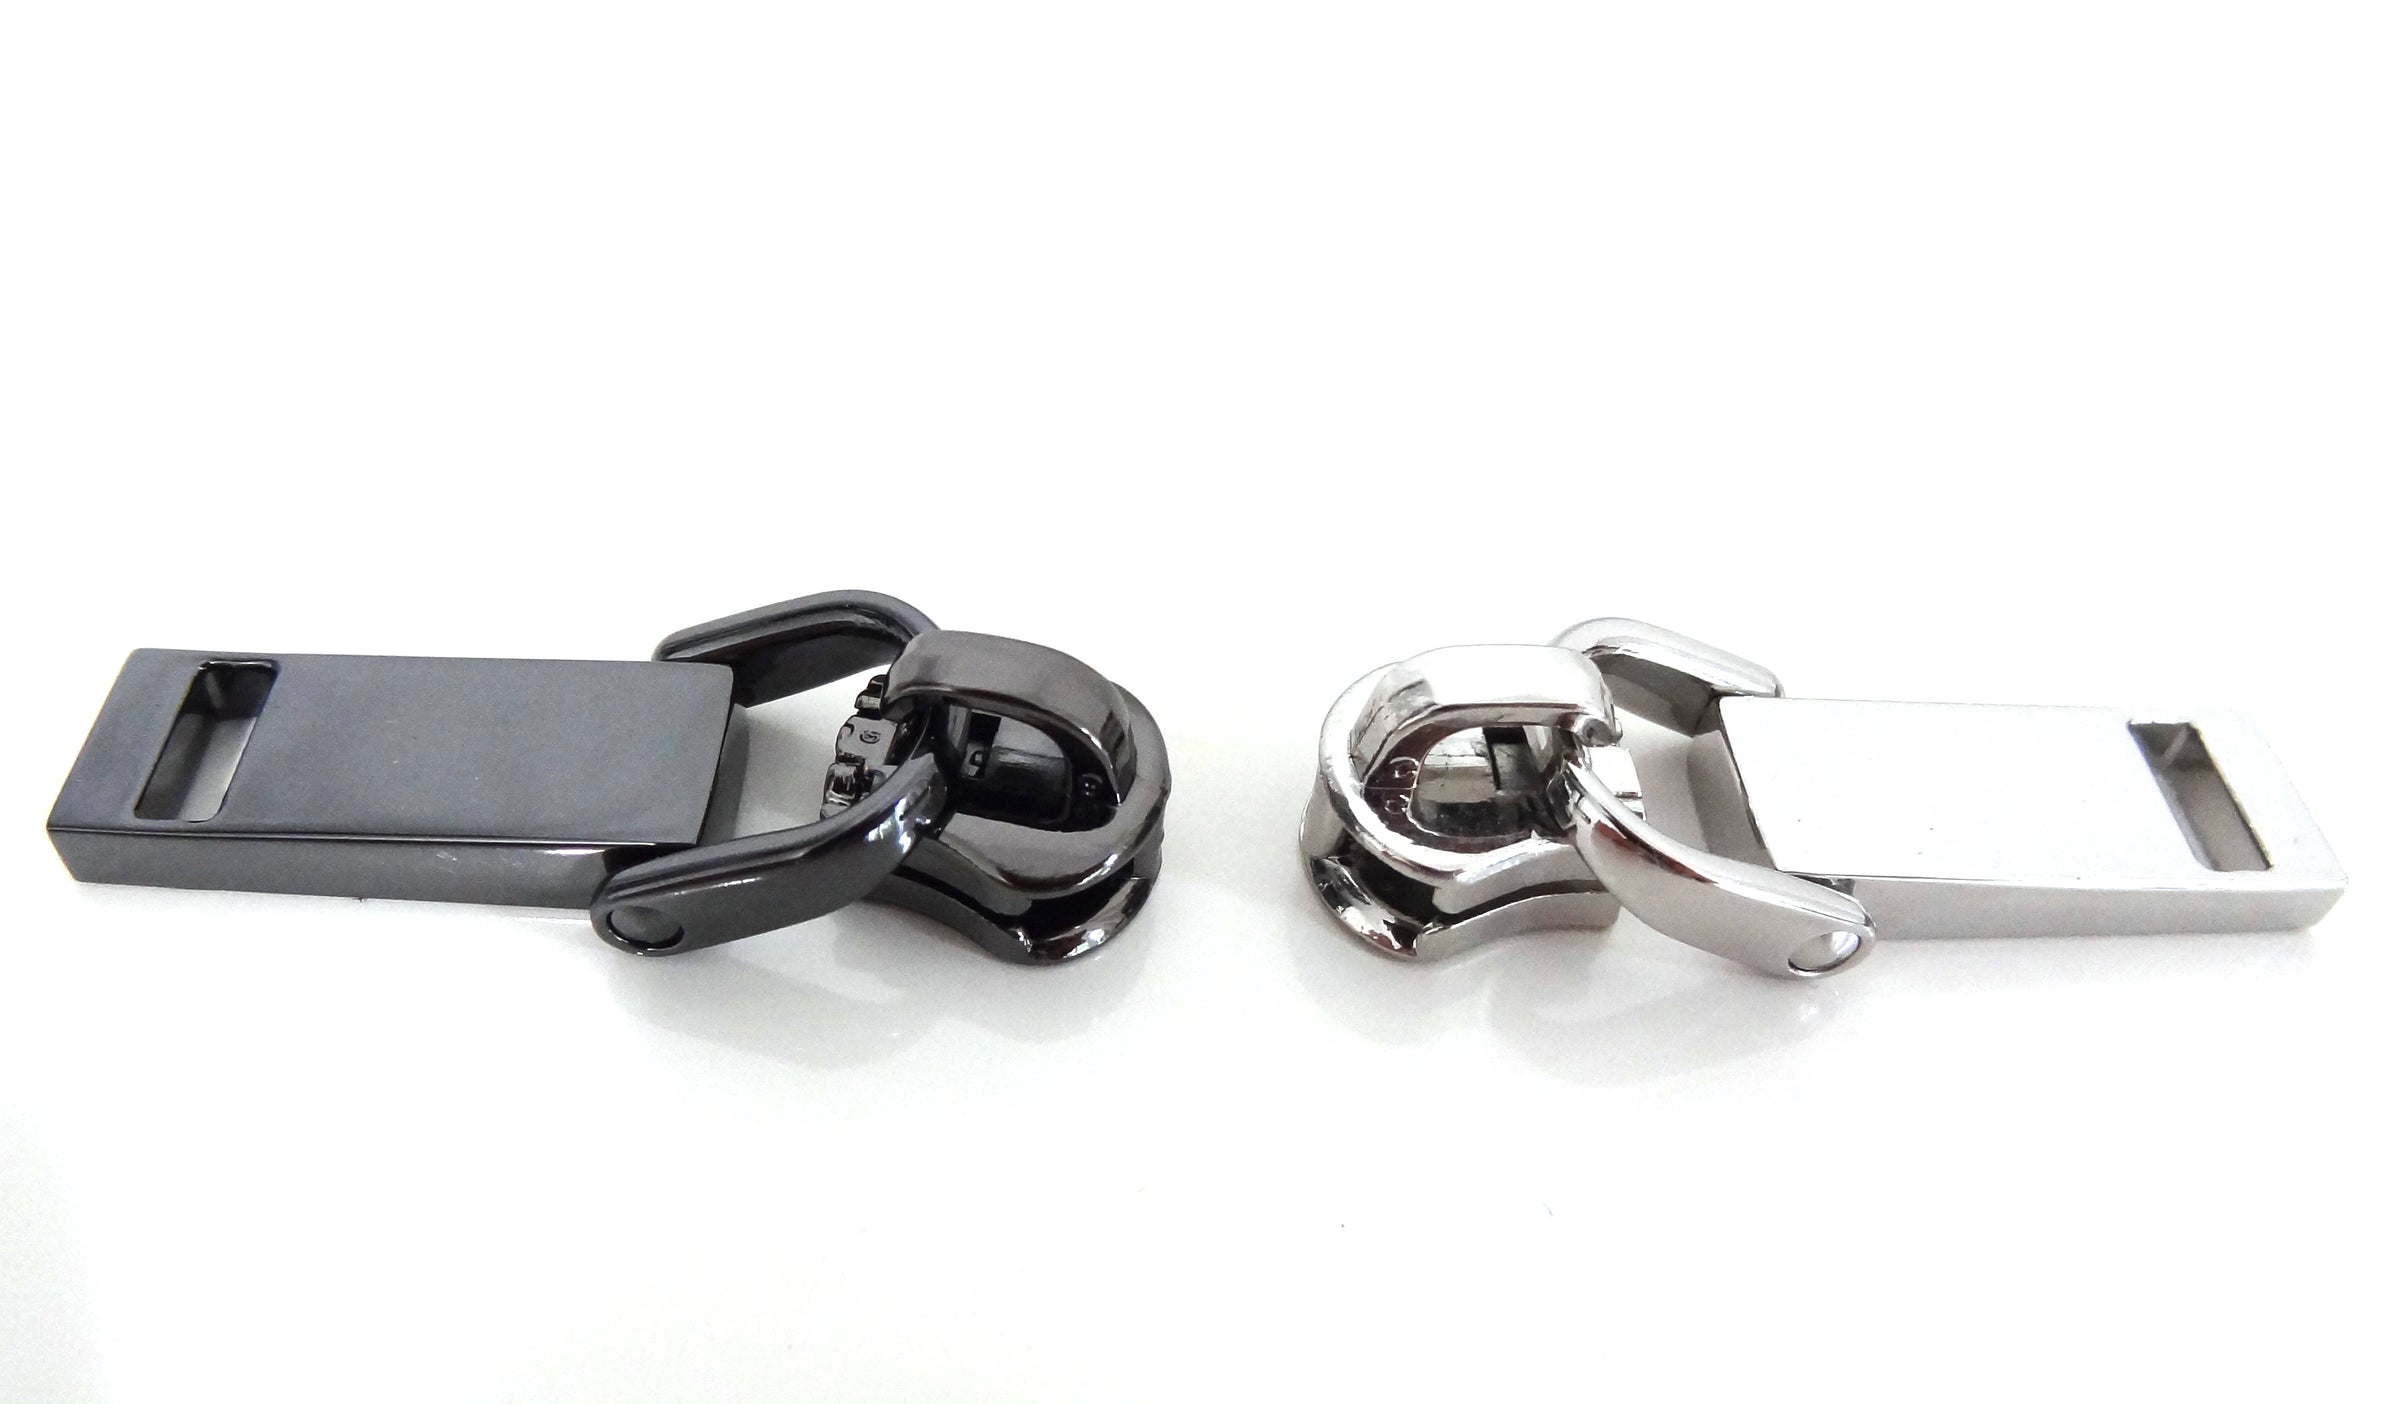  PH PandaHall 60pcs 4 Size Metal Zipper Head Sliders